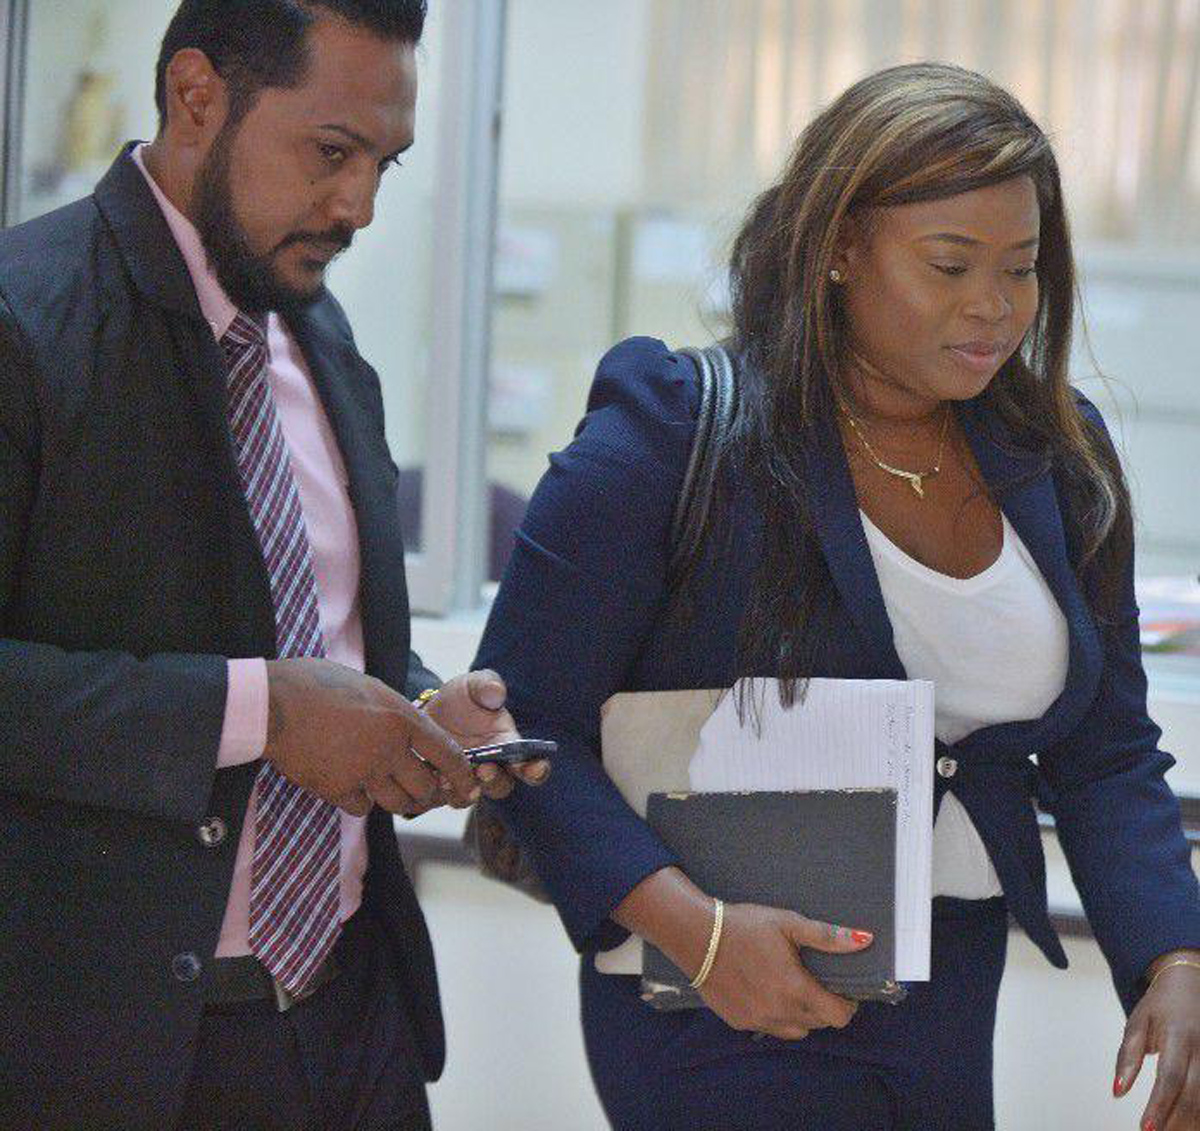 Trinidad: A man files a sexual harassment complaint against a female colleague